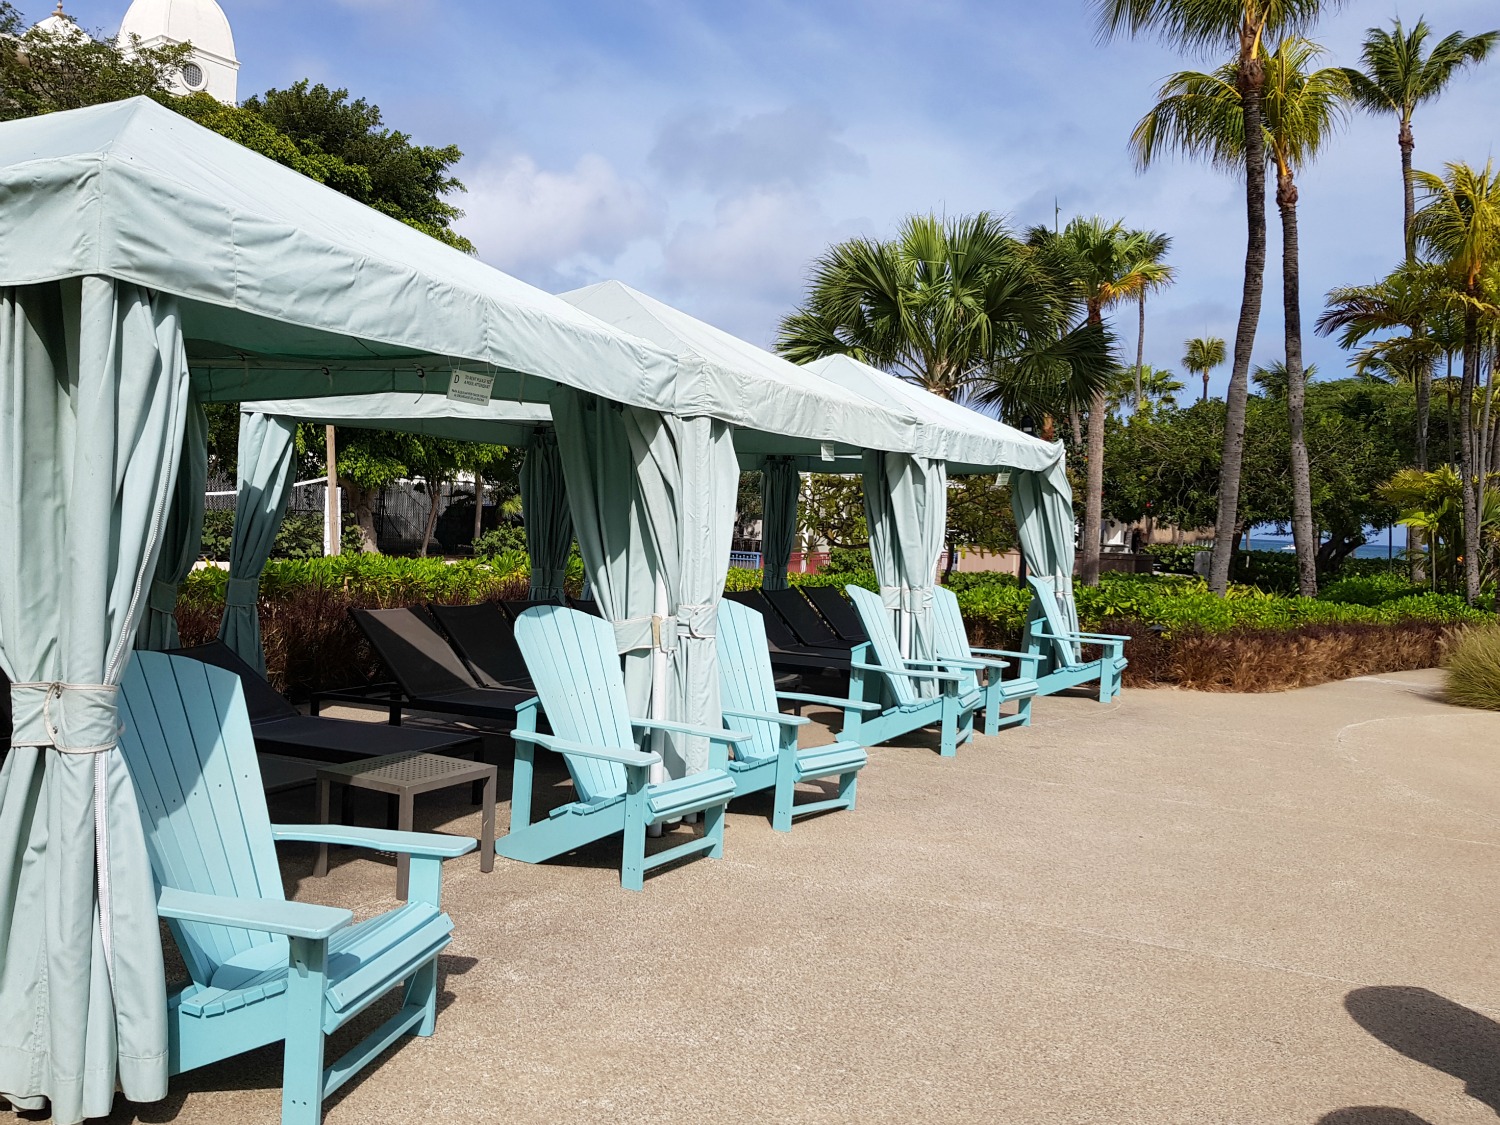 Pool cabanas - or poolapas - by one of the pools at the Hilton Aruba resort on Palm Beach. My Hilton Aruba review